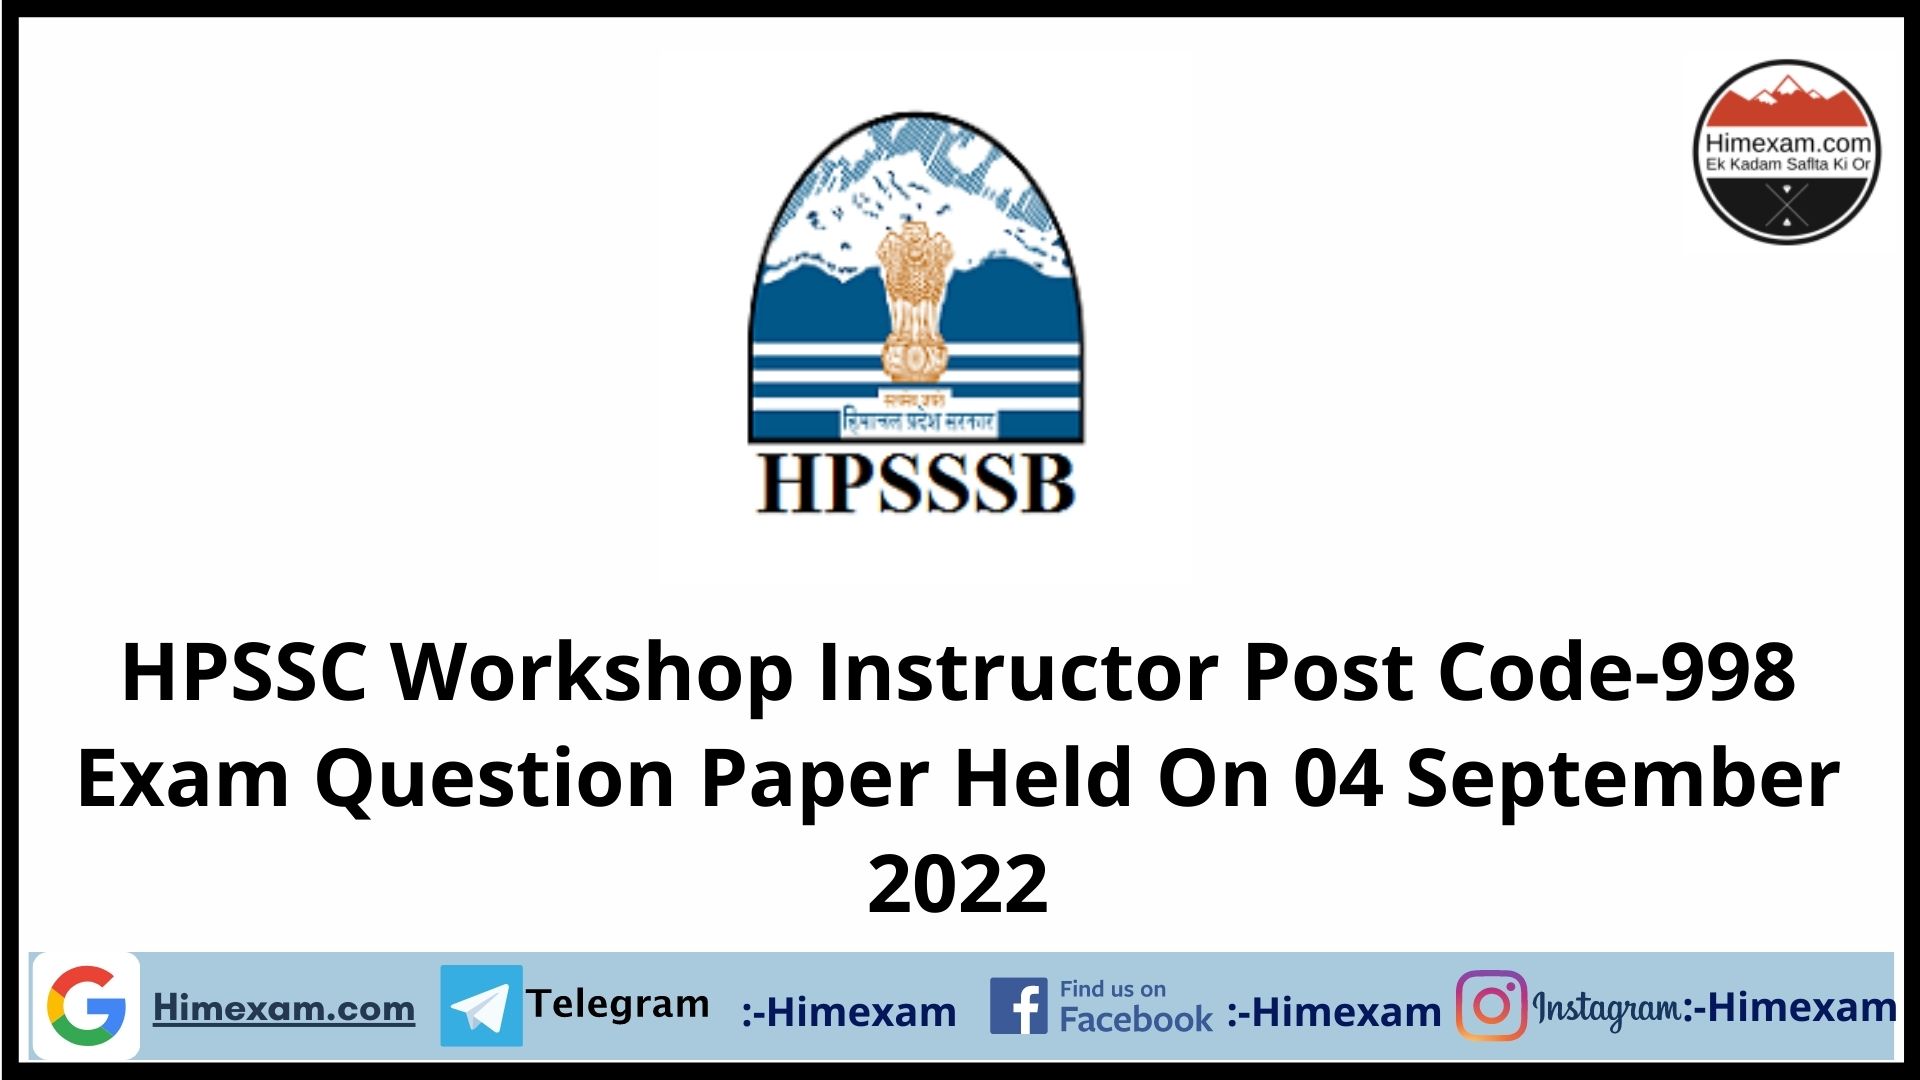 HPSSC Workshop Instructor Post Code-998 Exam Question Paper Held On 04 September 2022